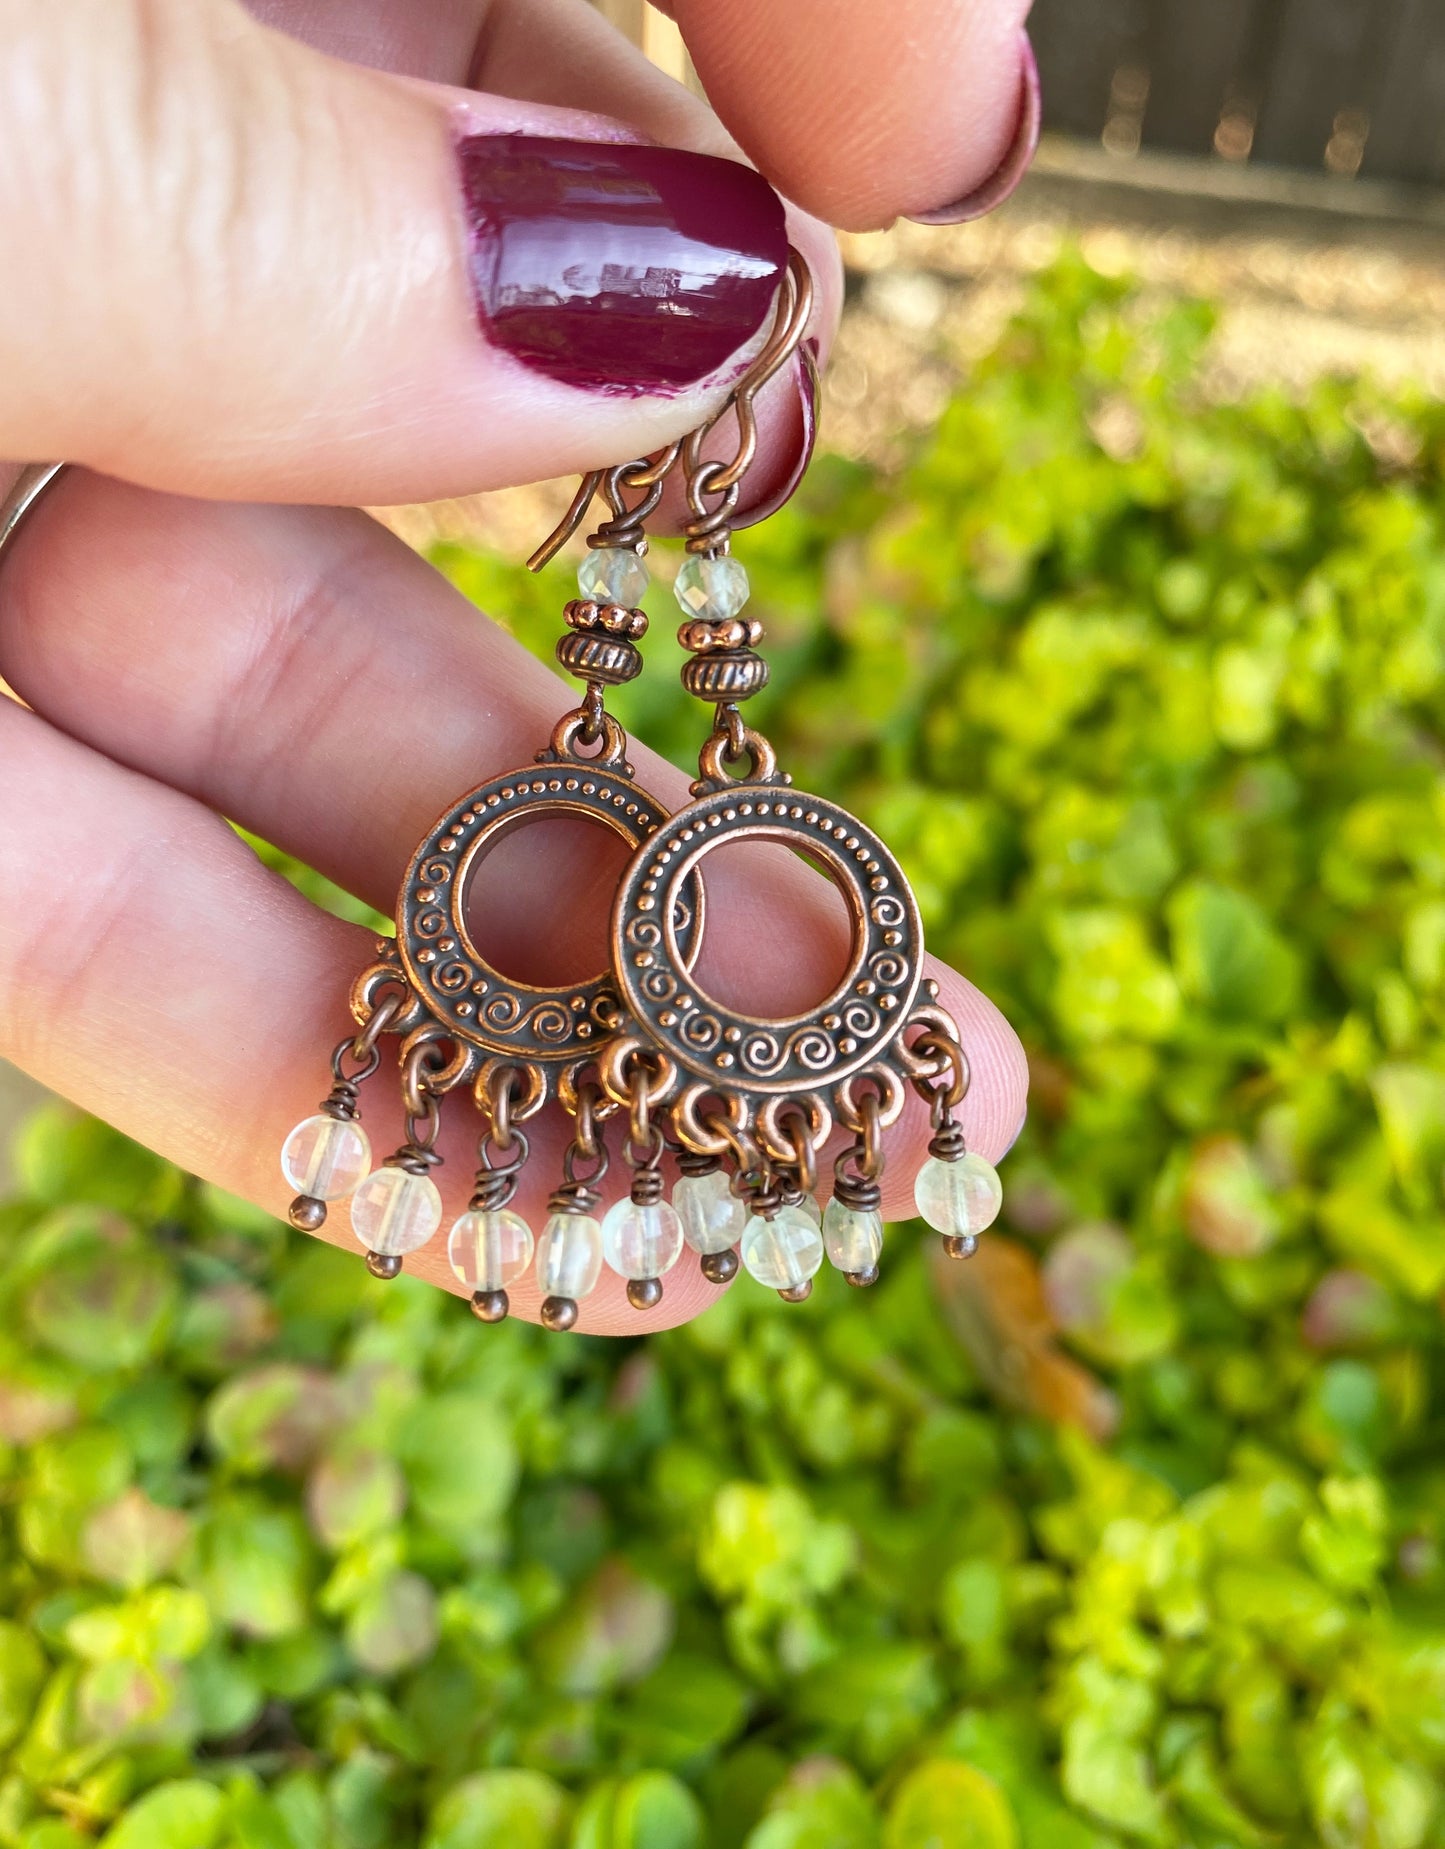 Prehnite stone and copper metal earrings - Andria Bieber Designs 